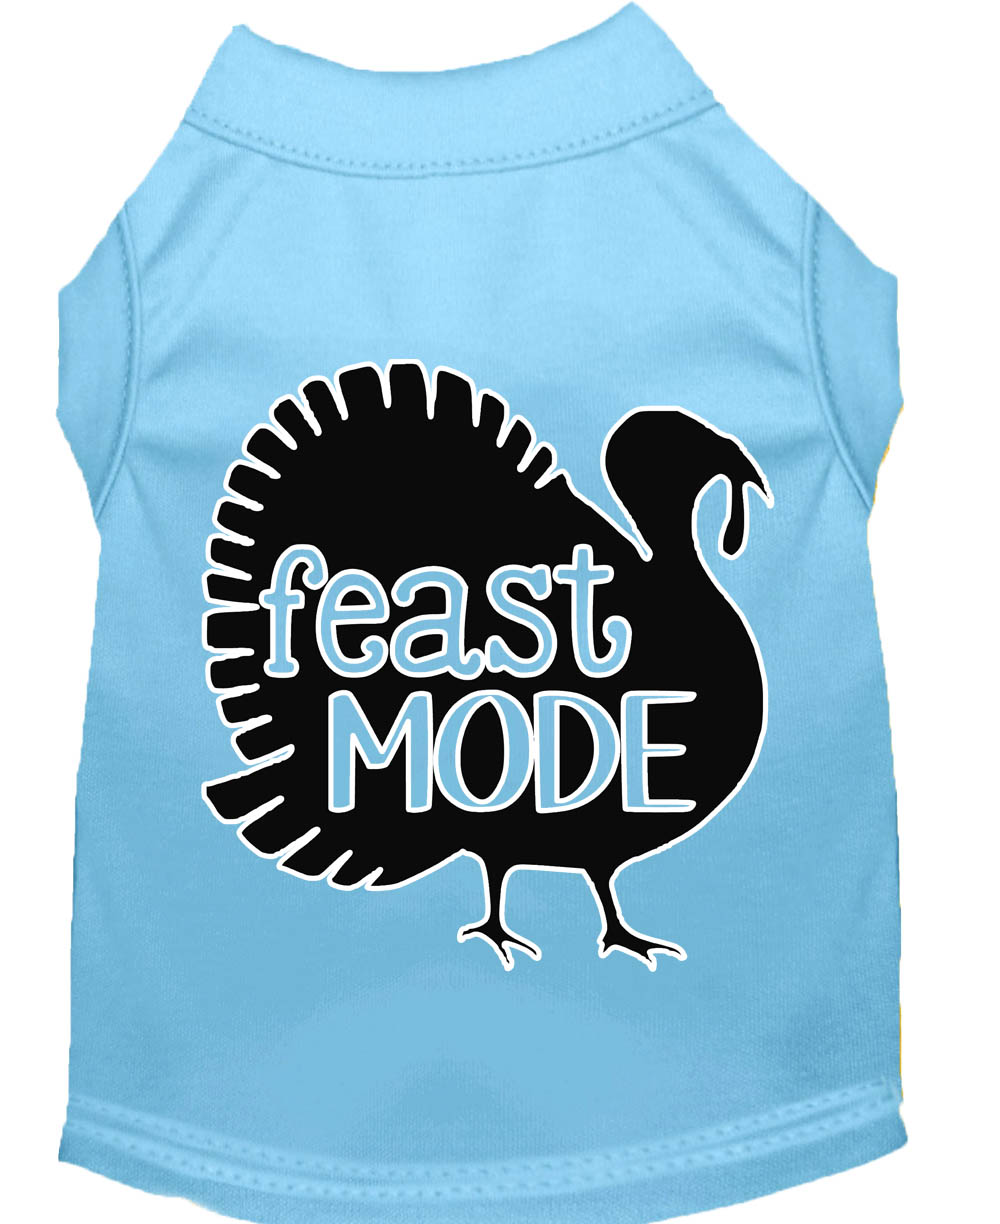 Feast Mode Screen Print Dog Shirt Baby Blue Lg